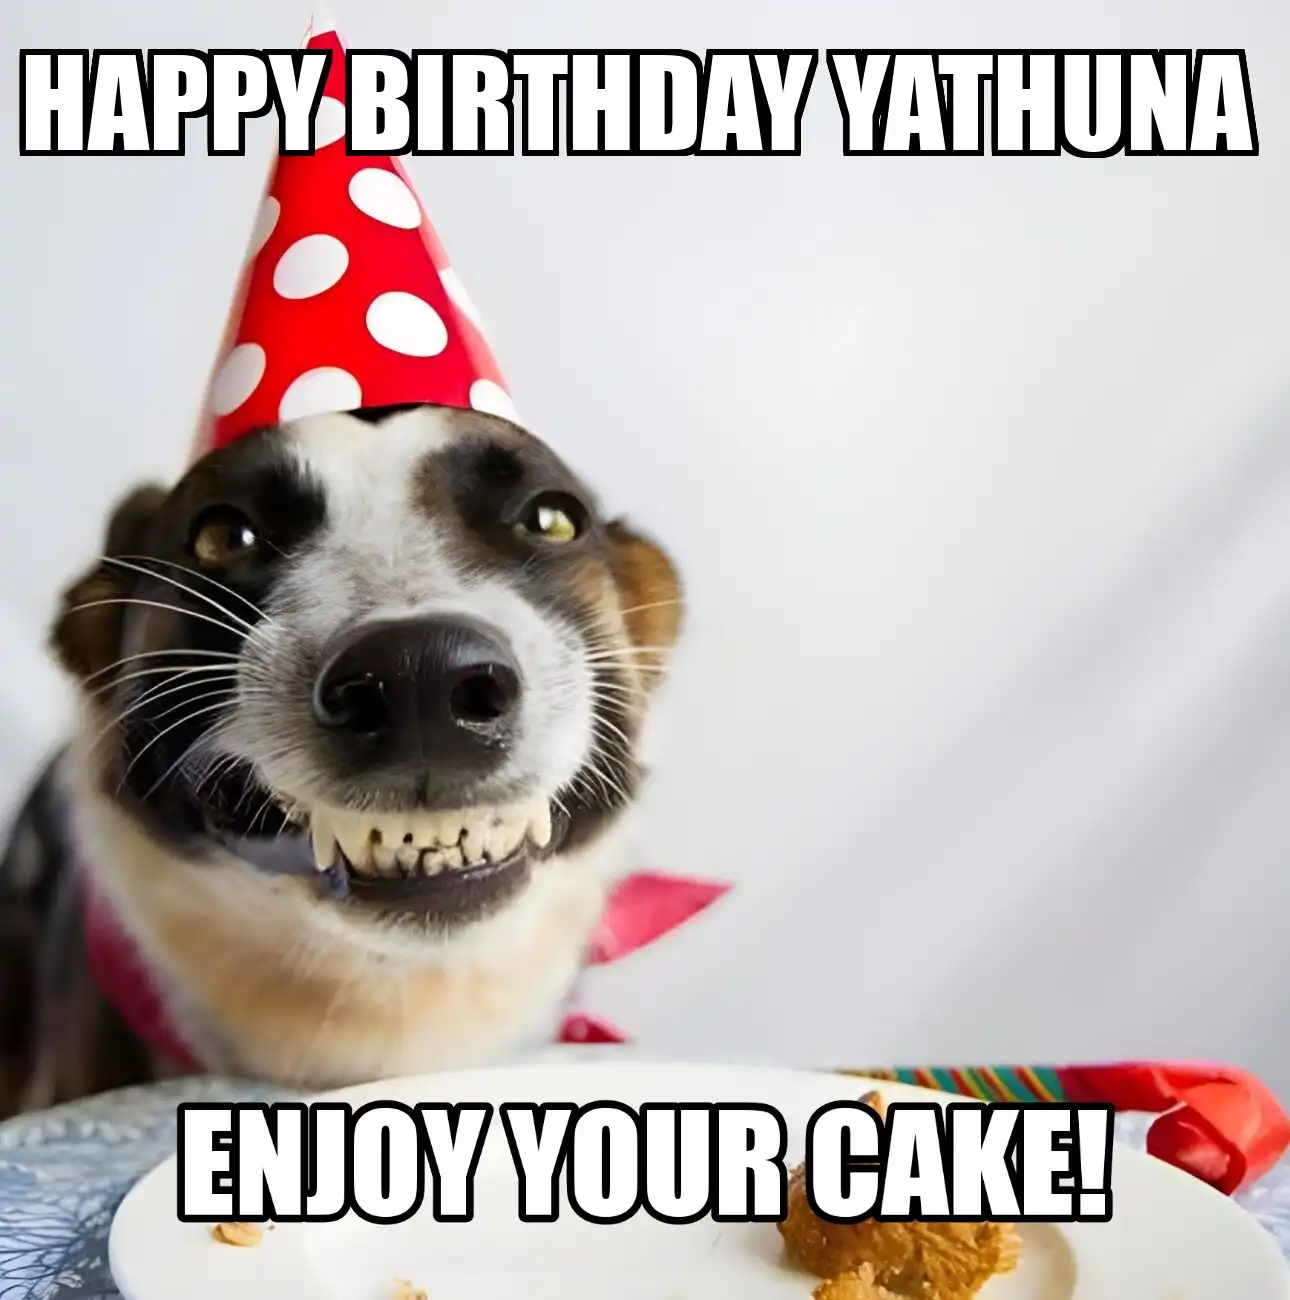 Happy Birthday Yathuna Enjoy Your Cake Dog Meme